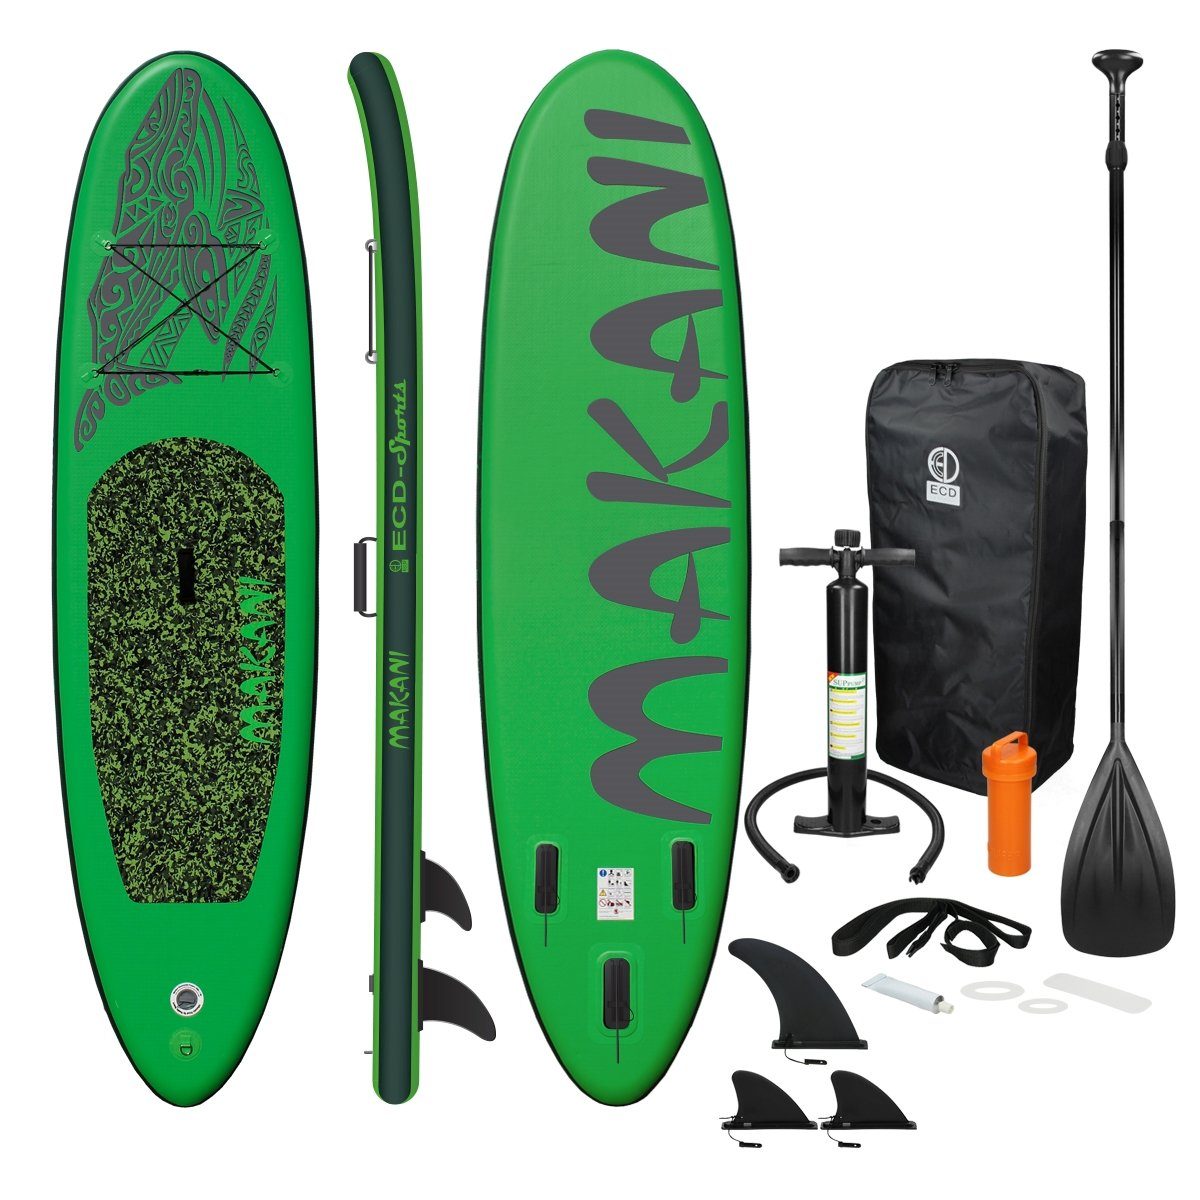 ECD Germany SUP-Board Aufblasbares Stand Up Paddle Board Makani Surfboard, Grün 320x82x15cm PVC bis 150kg Pumpe Tragetasche Zubehör | SUP-Boards